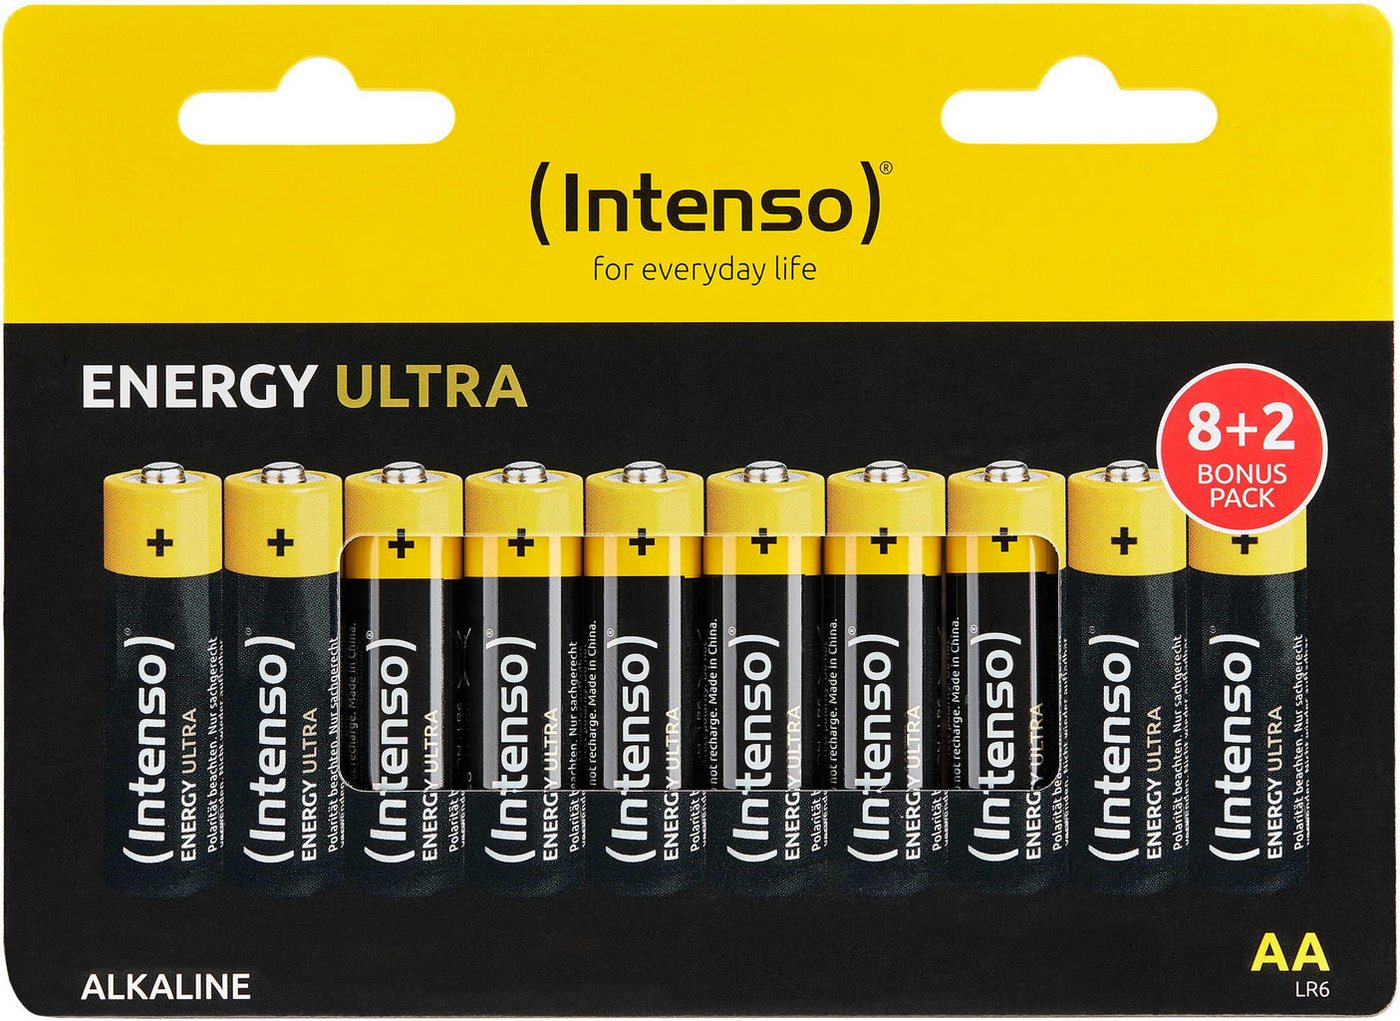 Intenso 10 Energy Ultra AA / Mignon Alkaline Batterien im 10er Karton Batterie von Intenso